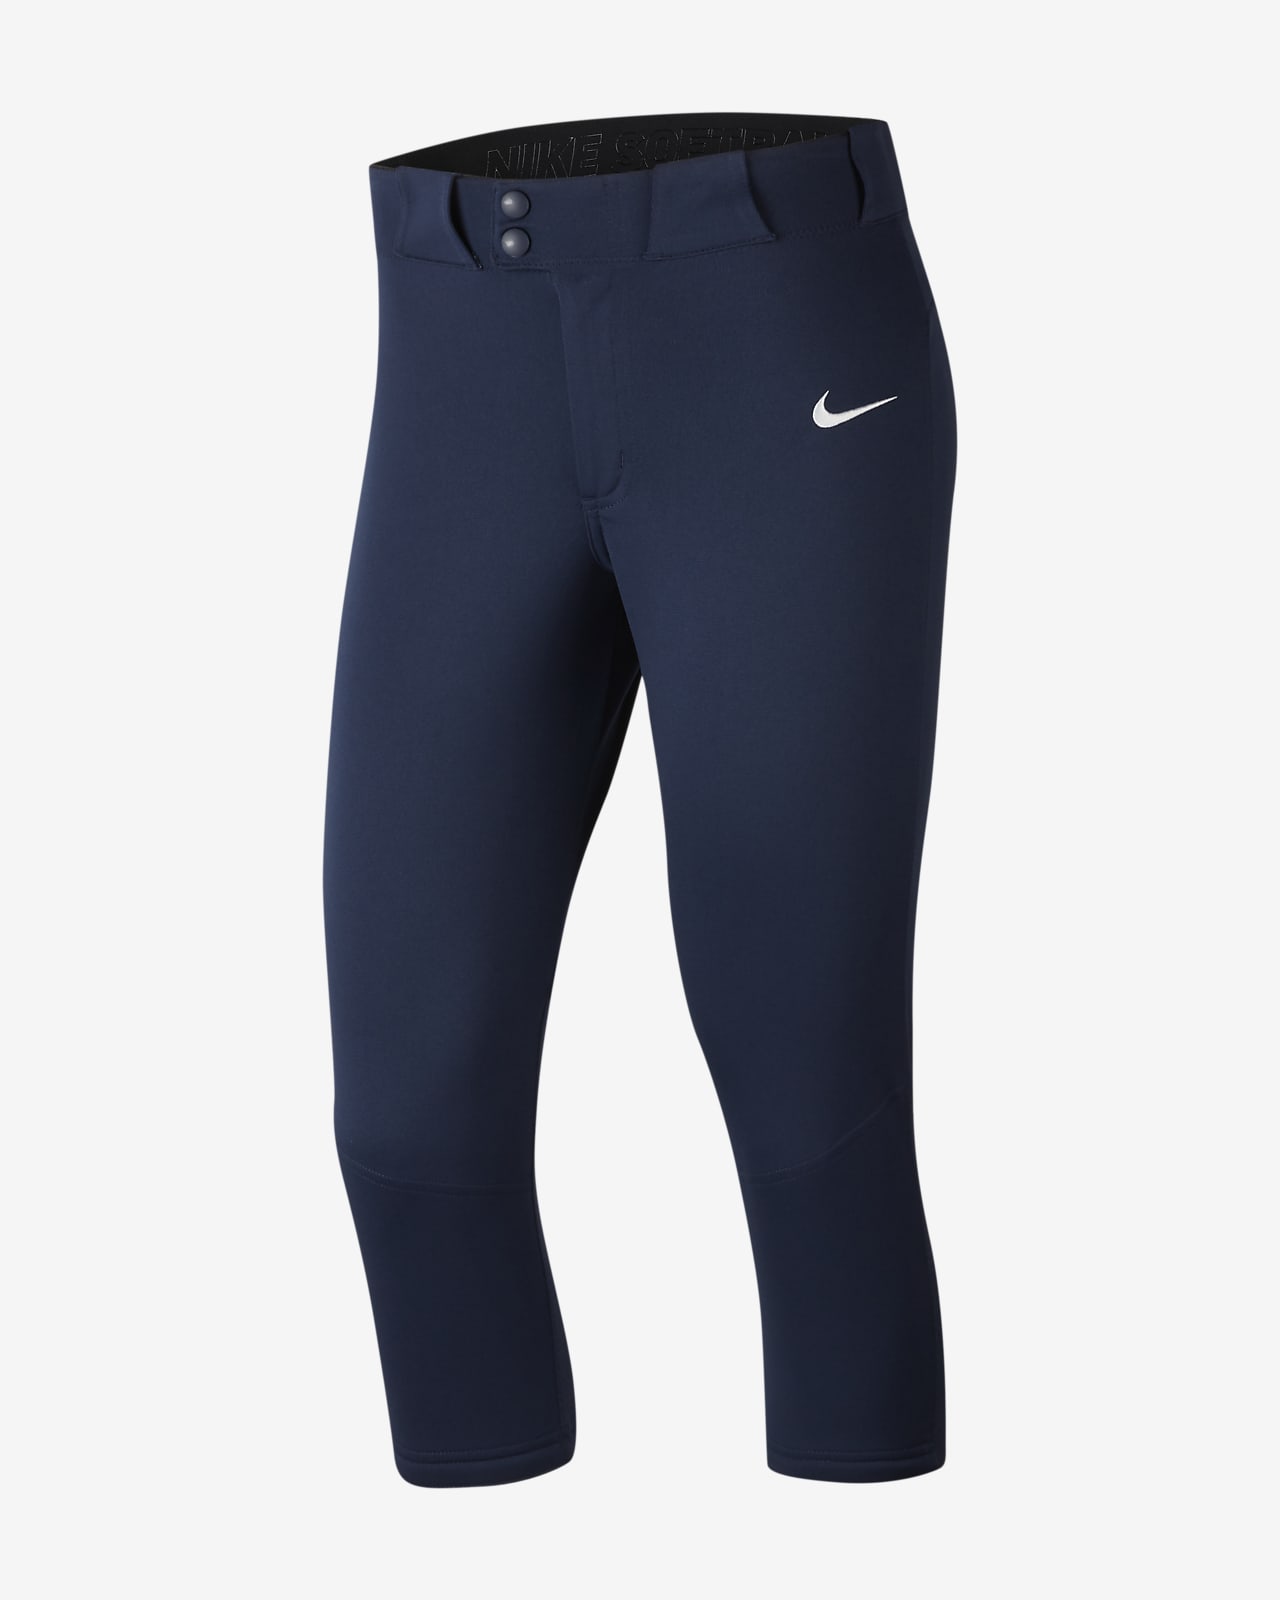 Pantalones de softball largo 3/4 para mujer Nike Vapor Select